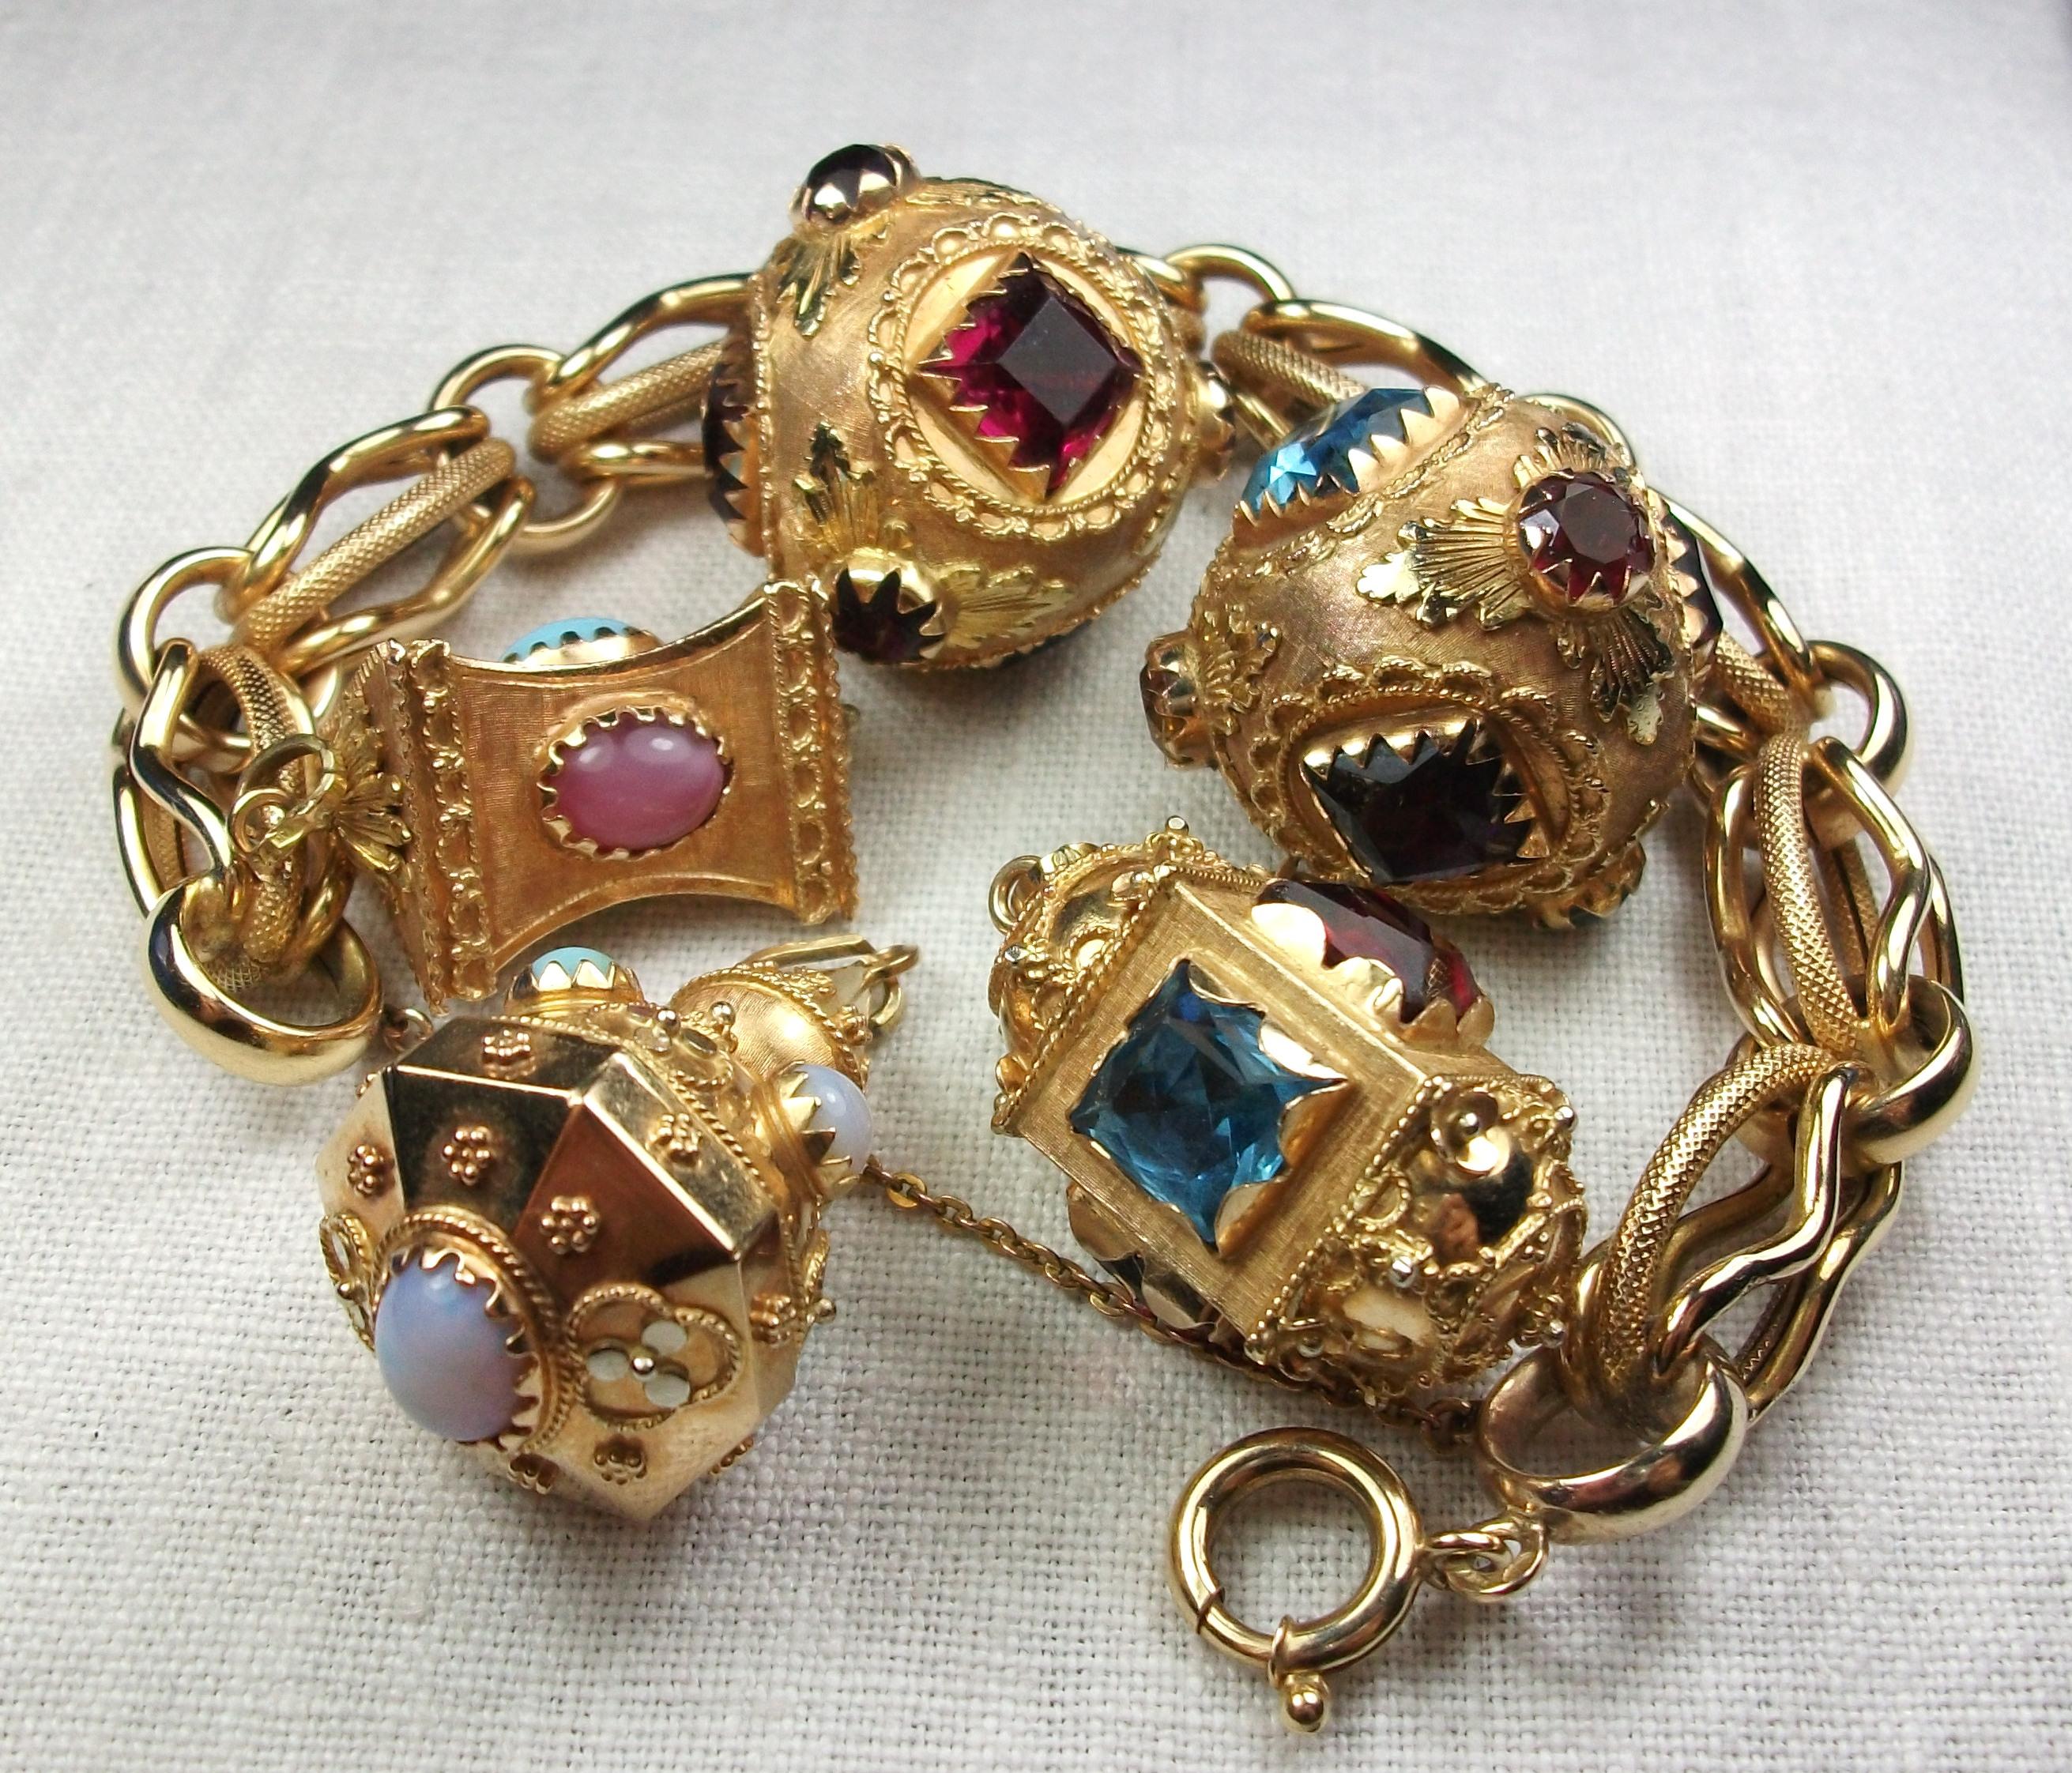 Retro Vintage 1950s Italian 18k Yellow Gold Etruscan Revival Charm Bracelet 130 Grams For Sale